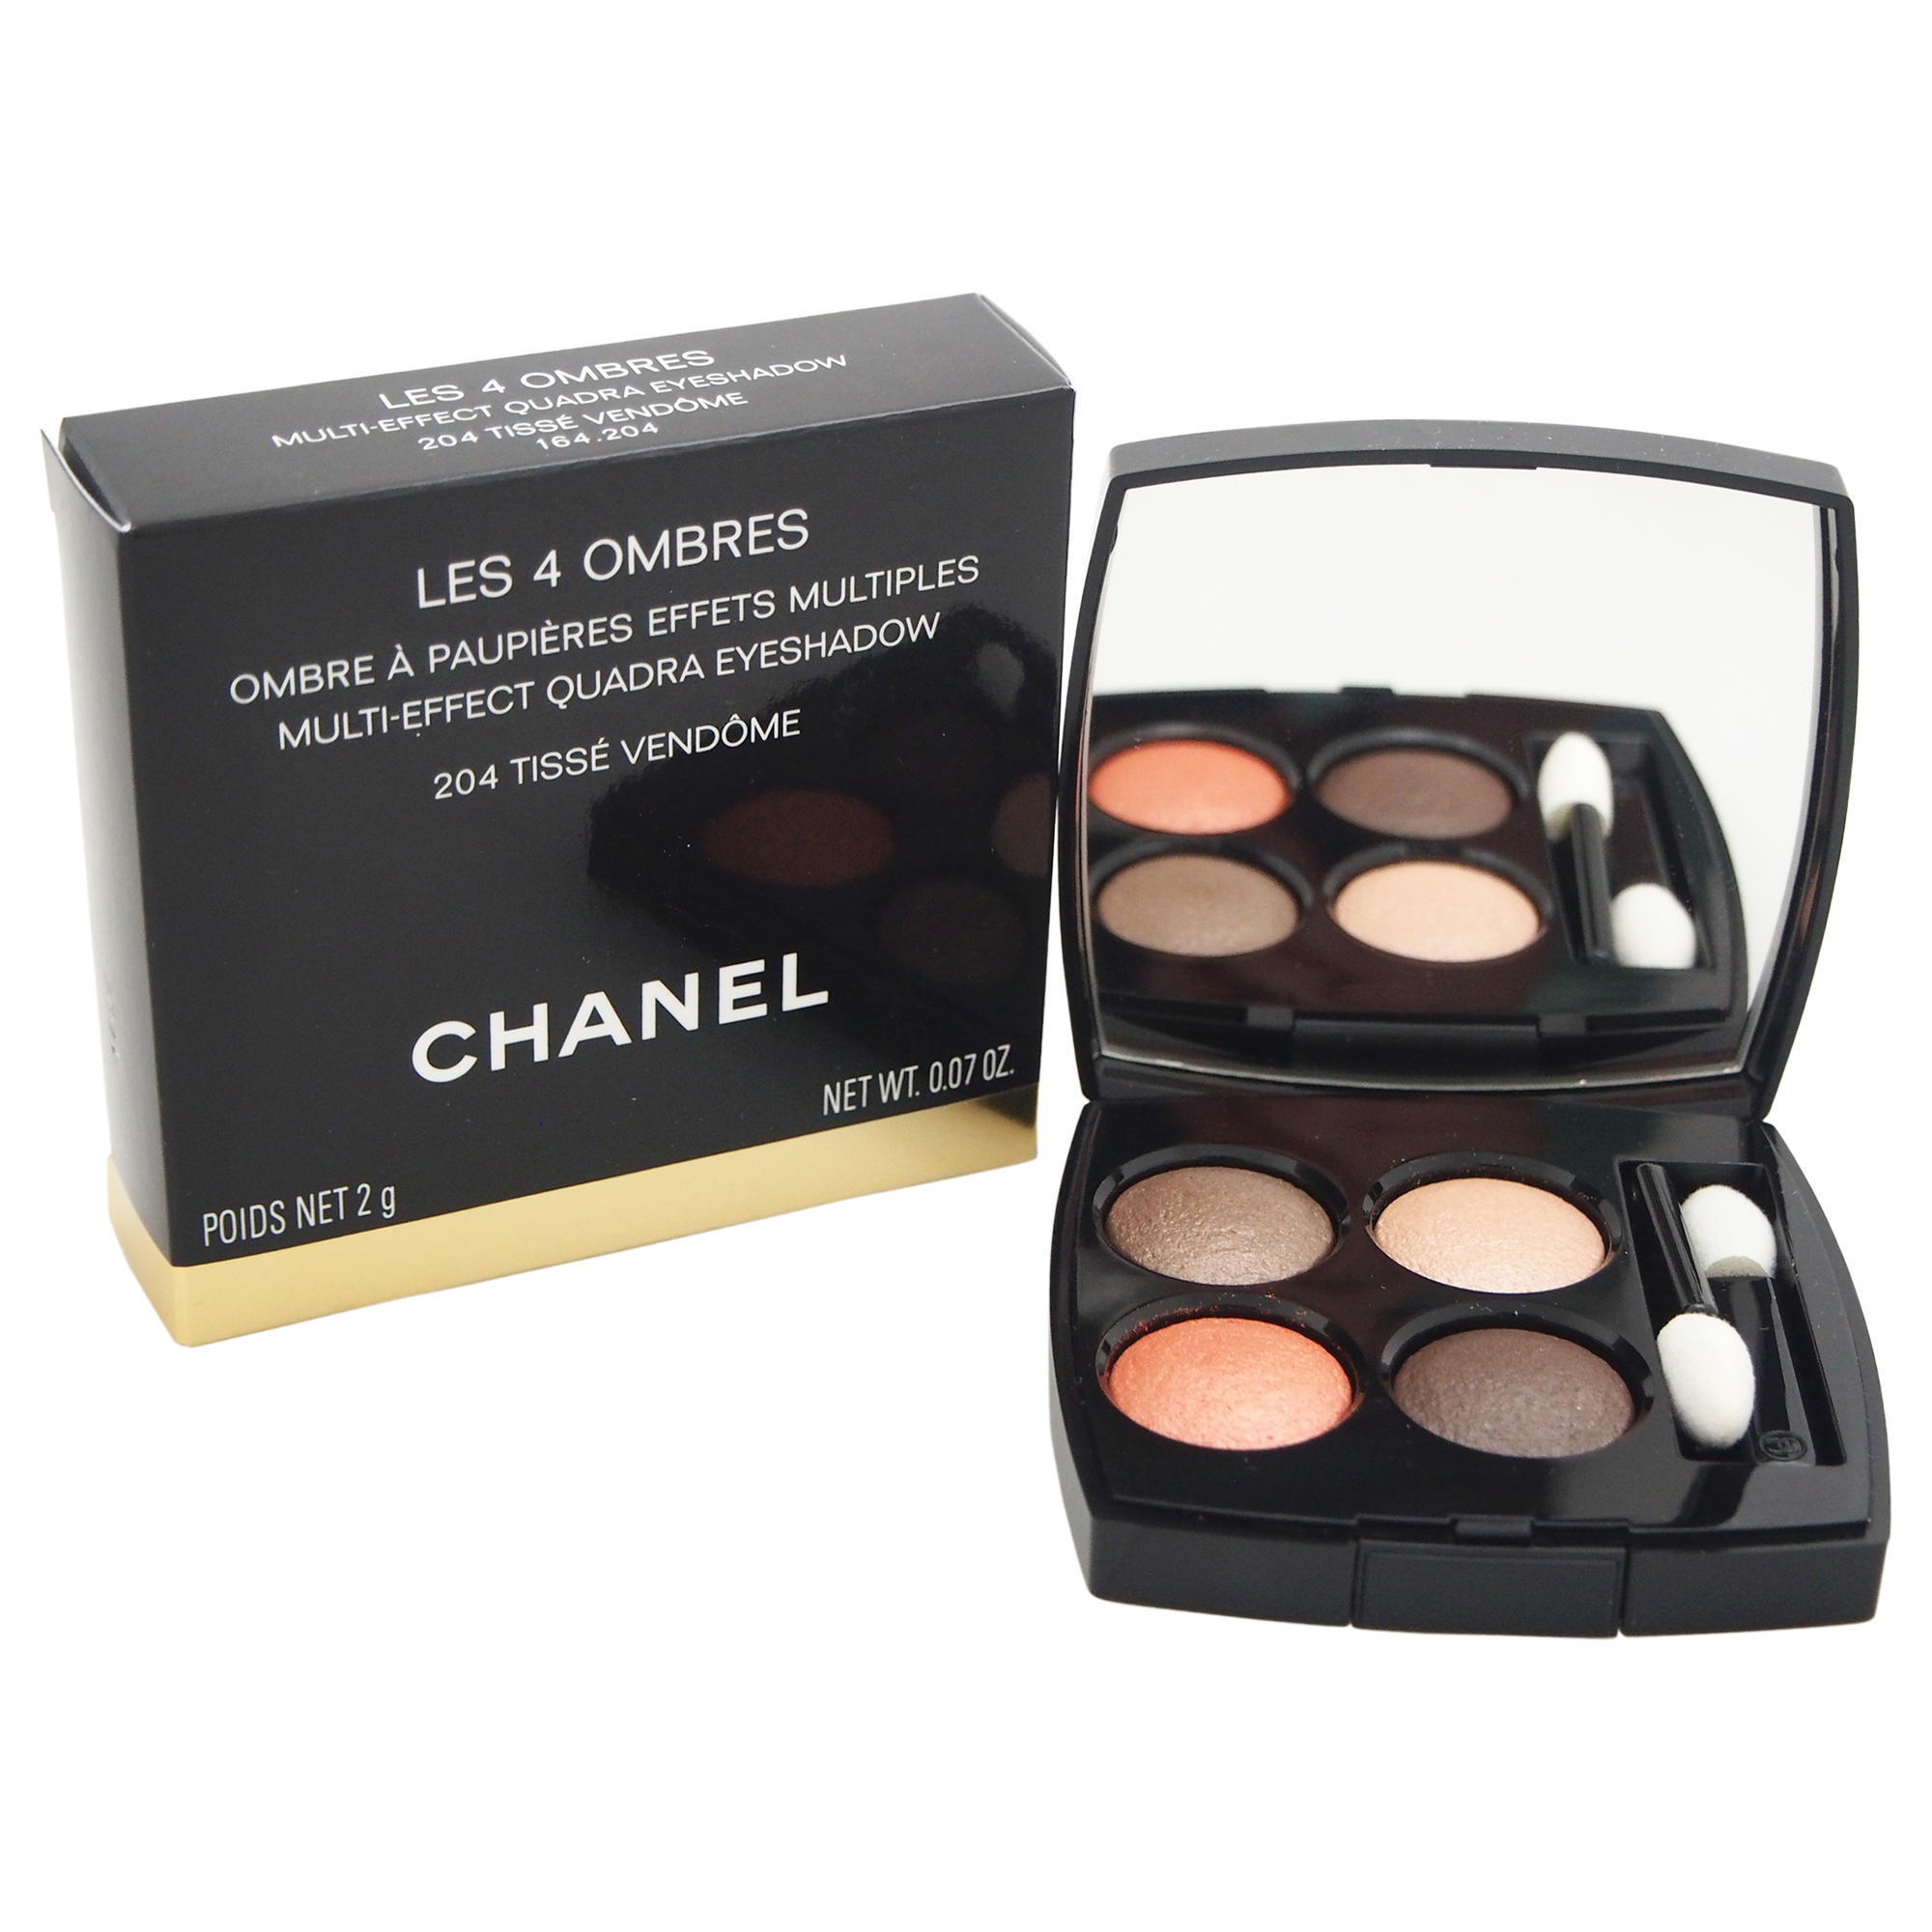 Chanel Les 4 Ombres Multi-Effect Quadra Eyeshadow - # 204 Tisse Vendome by  for Women - 0.04 oz Eyeshadow